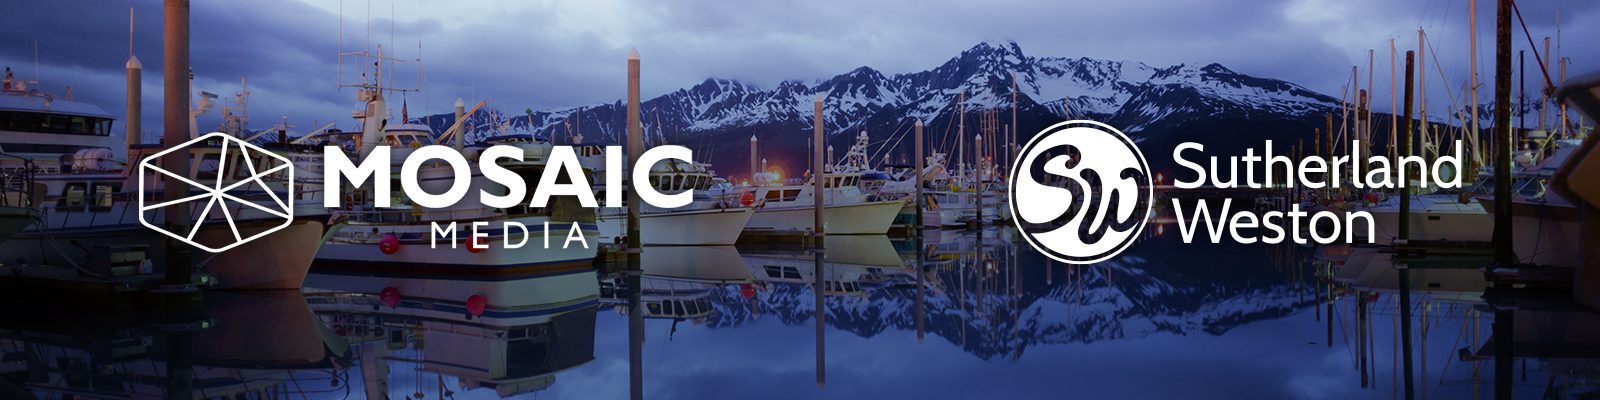 Alaska skyline with logos